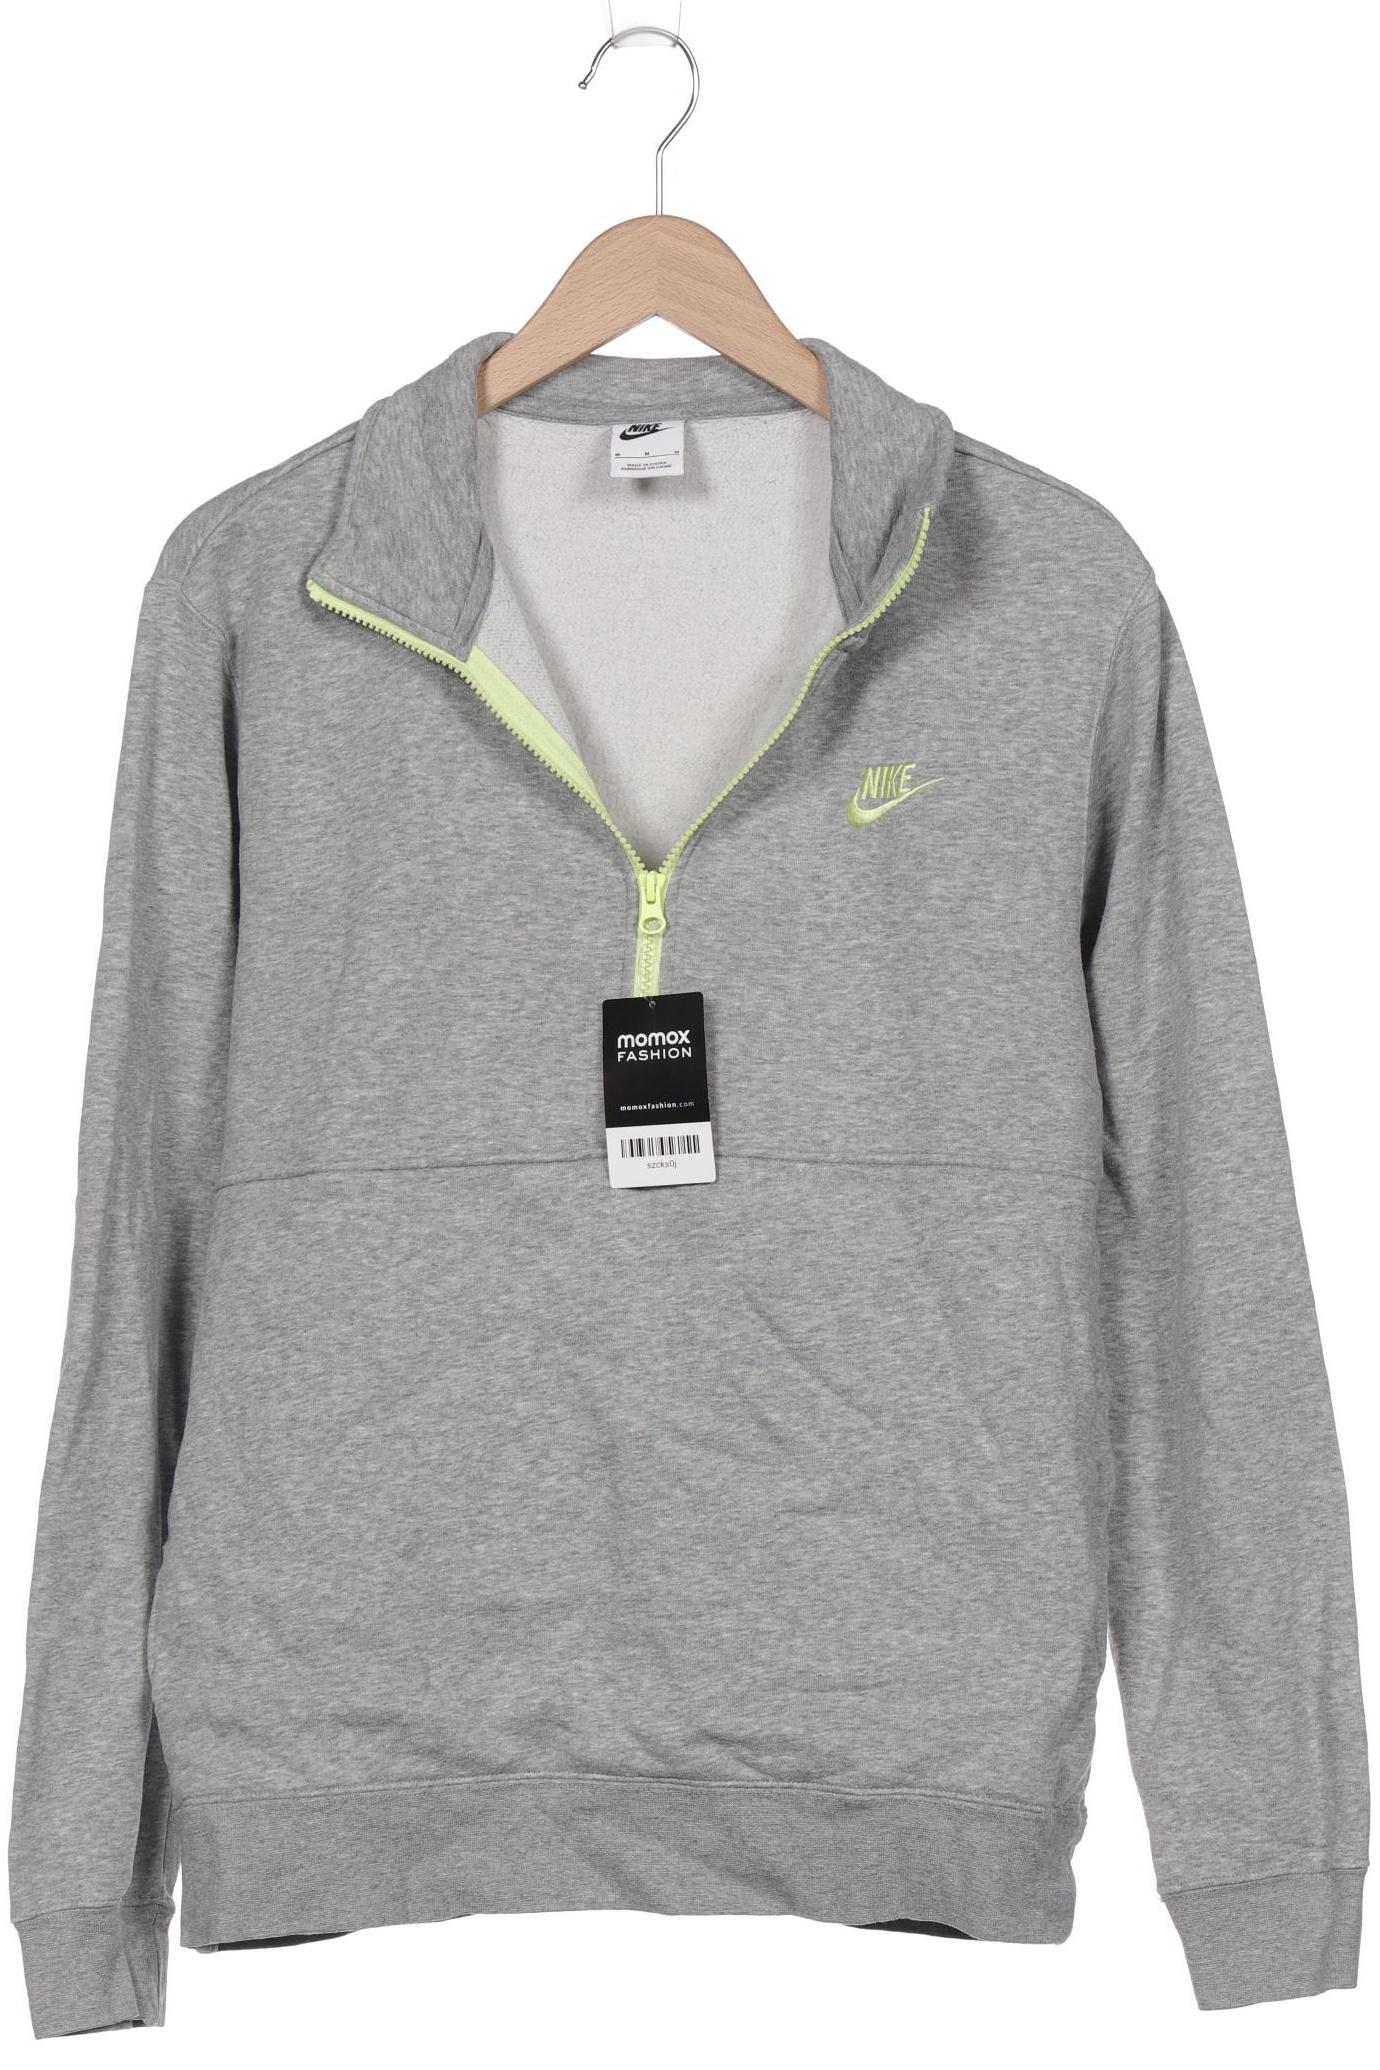 Nike Herren Sweatshirt, grau von Nike